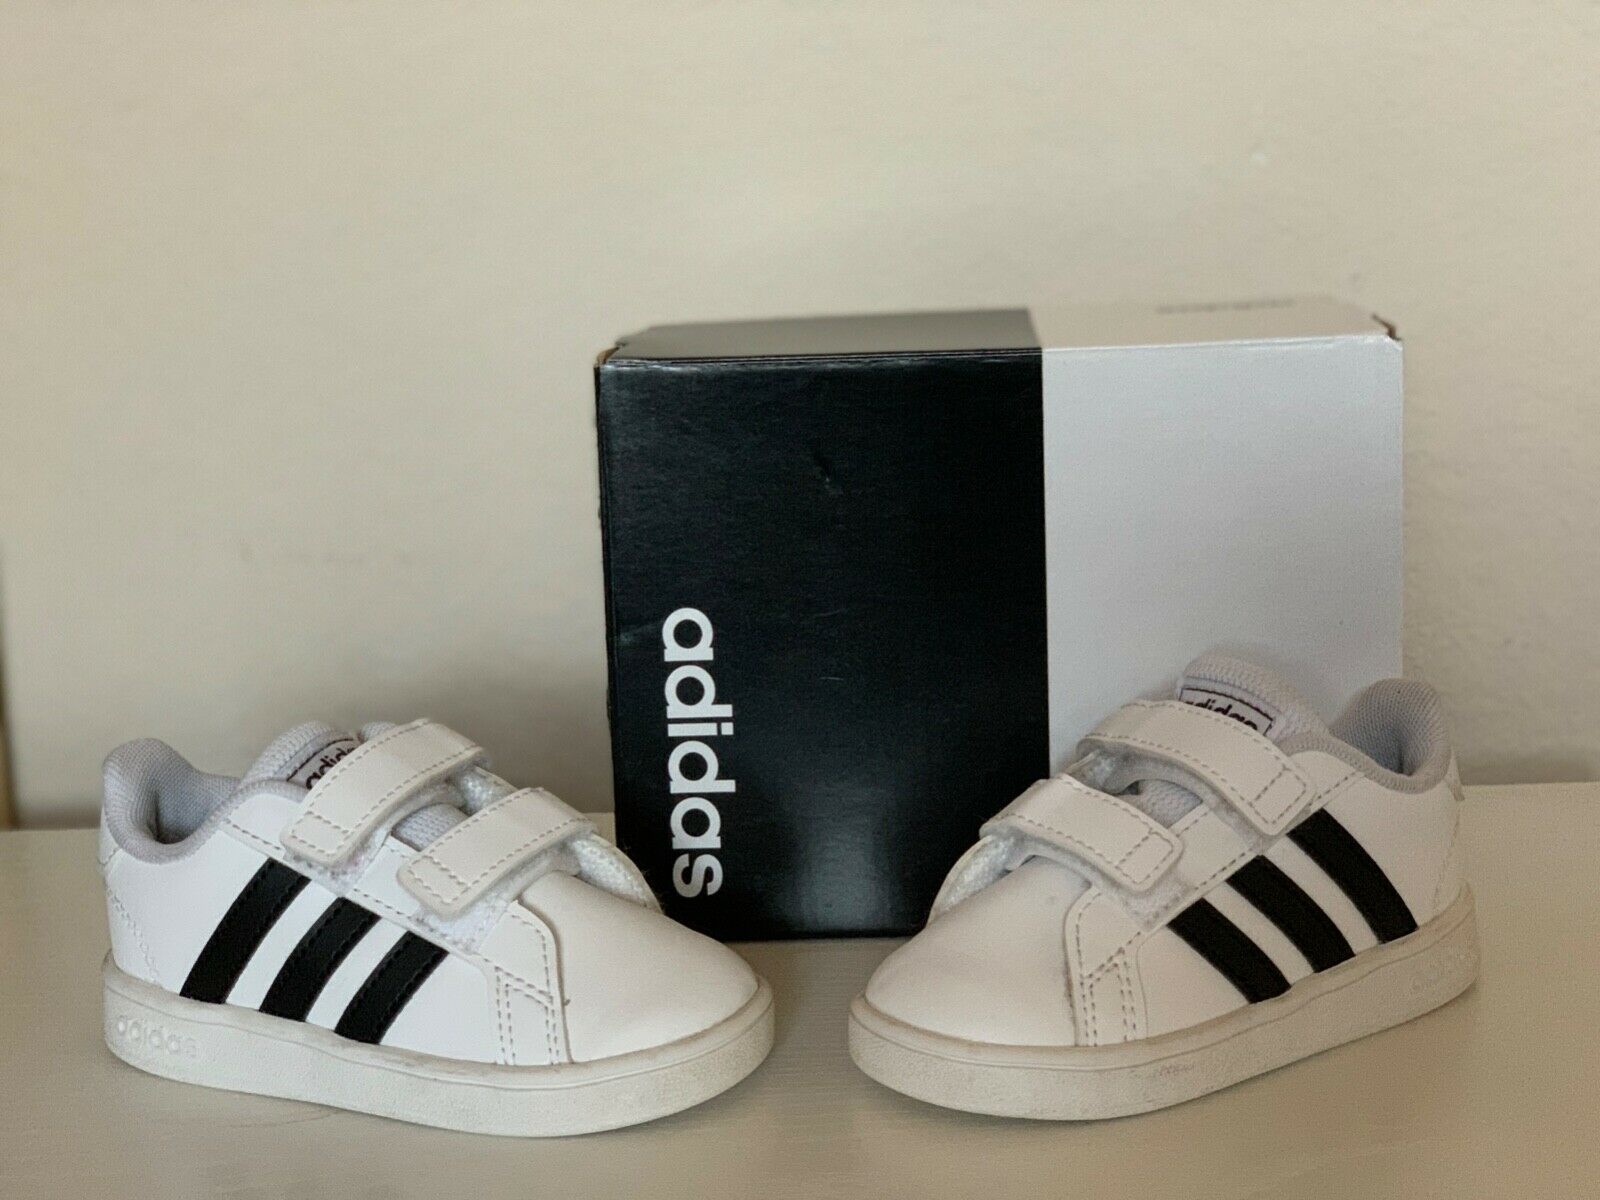 Adidas w/box Original Old School Boy Girl White w/Black stripes Shoes 6K